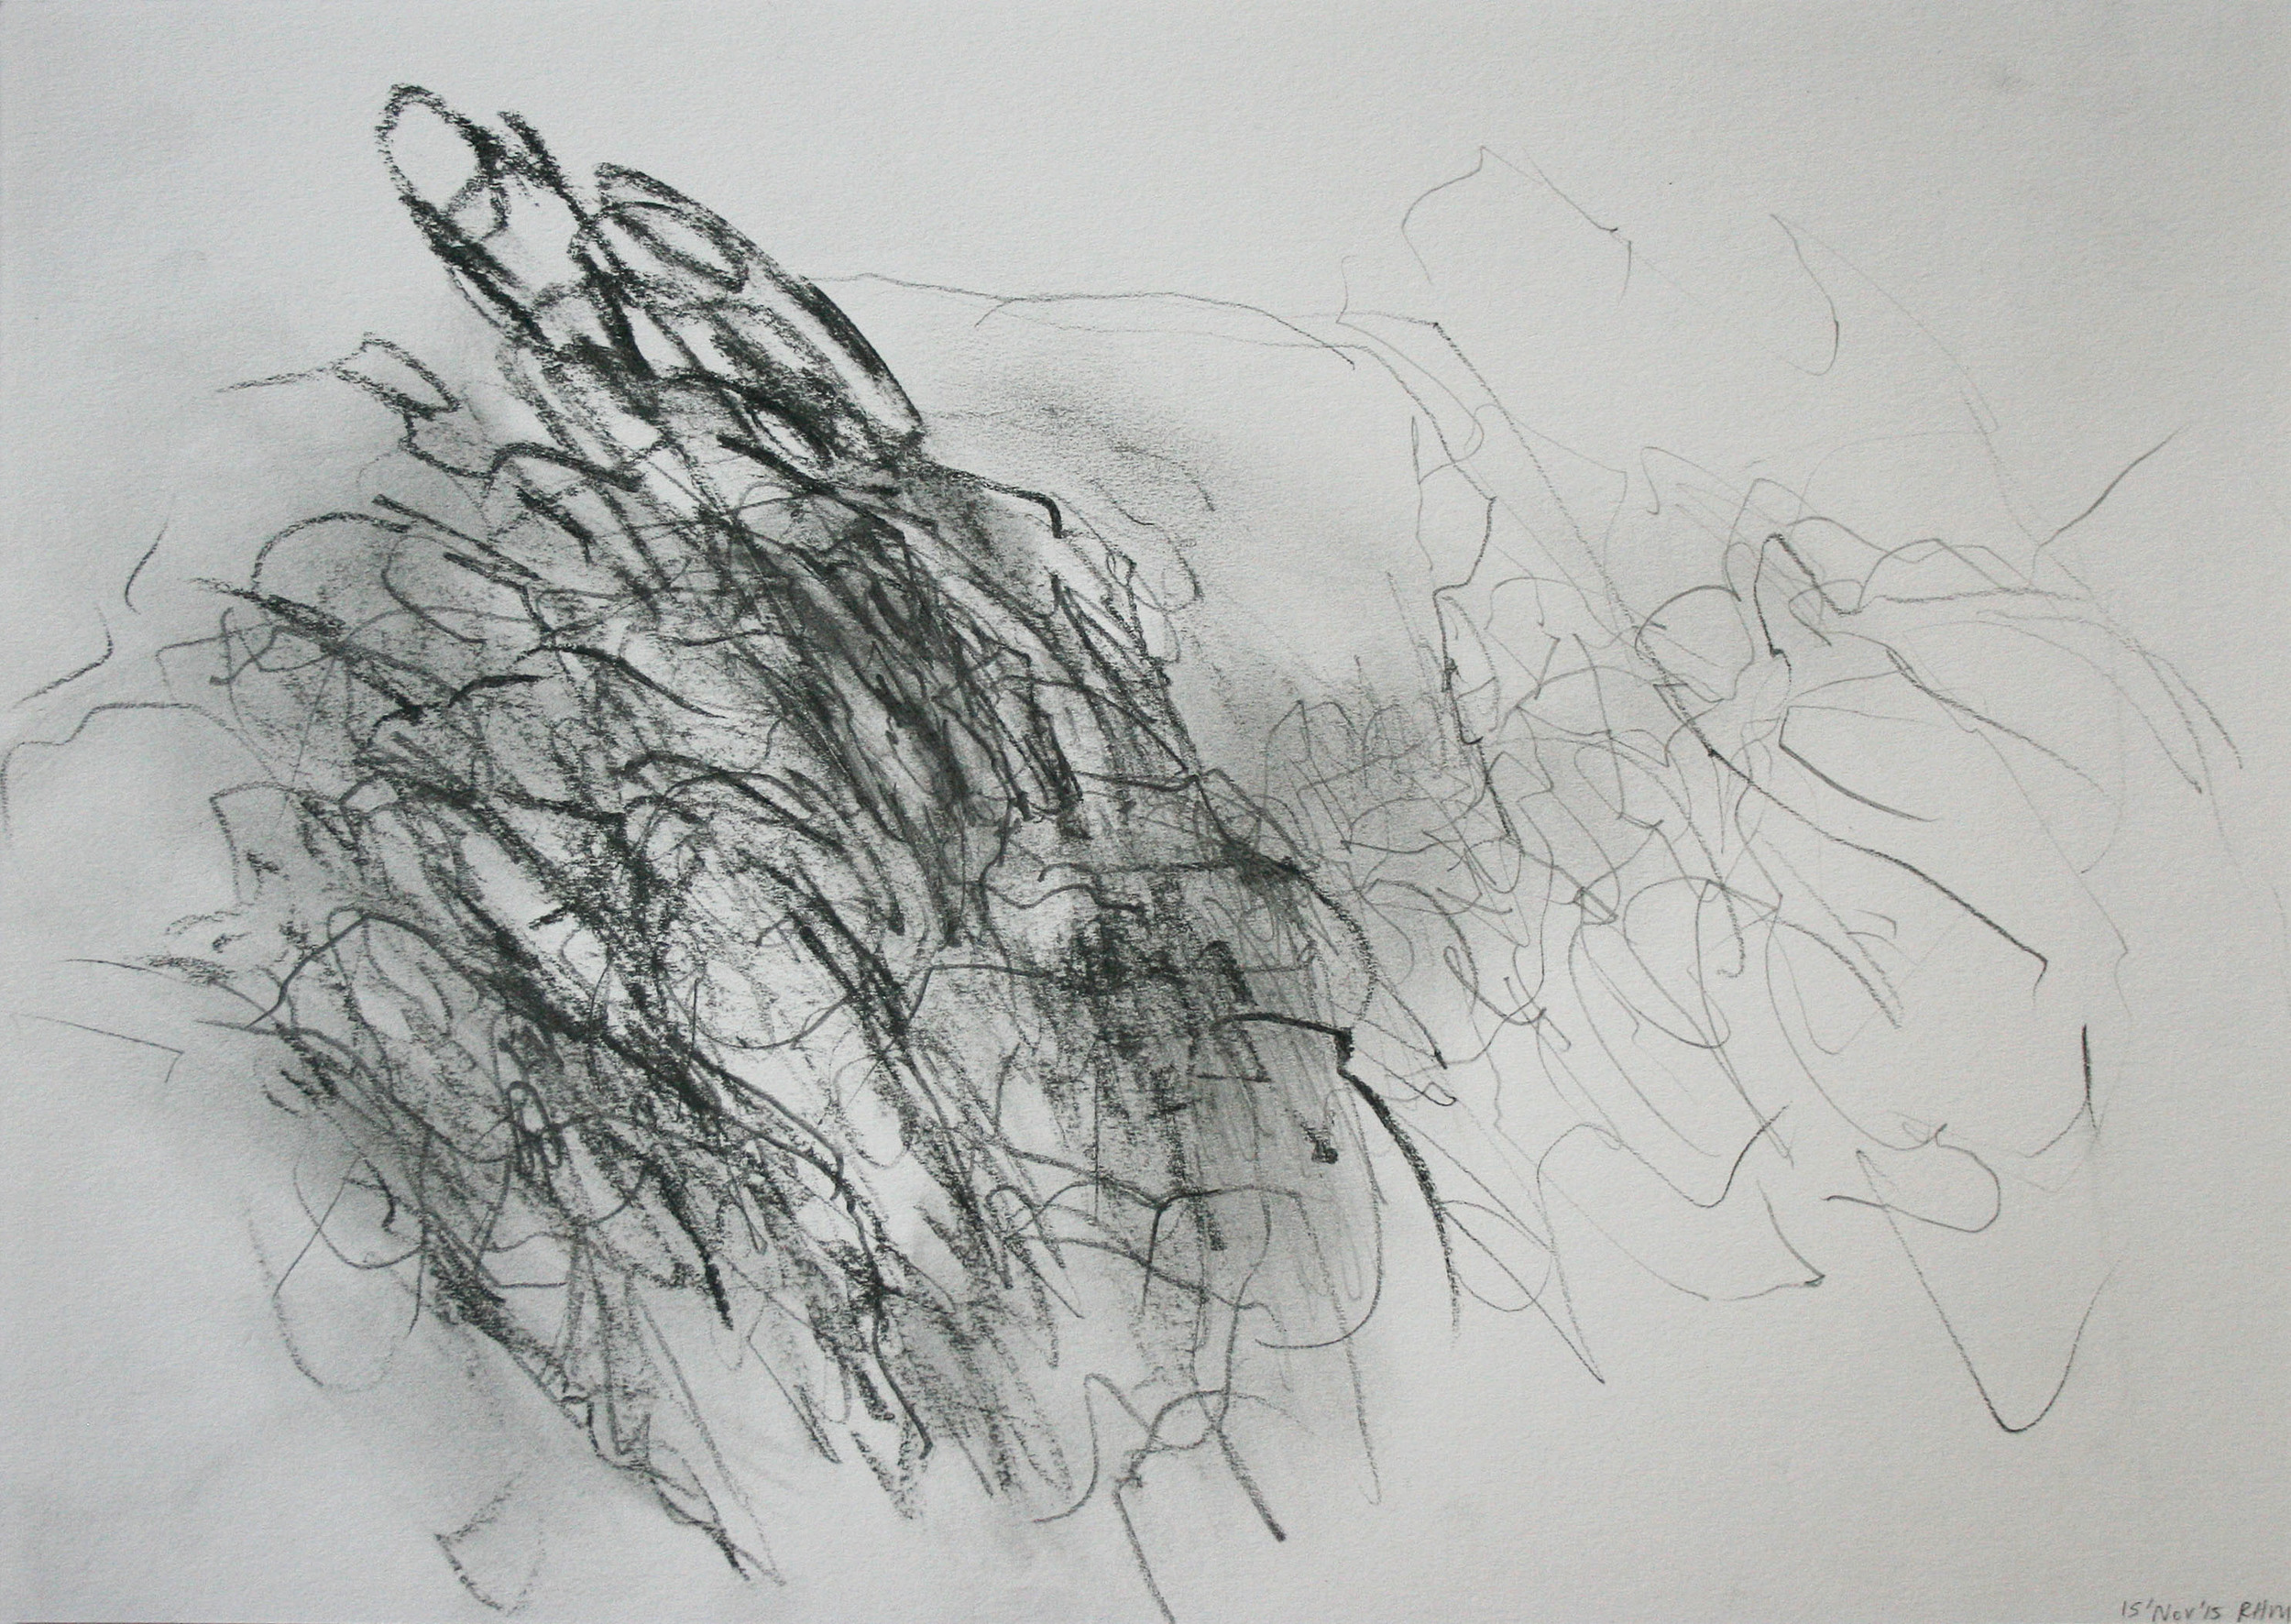  Left hand Drawing VI  November  2015  graphite on paper  21 x 30 cm 